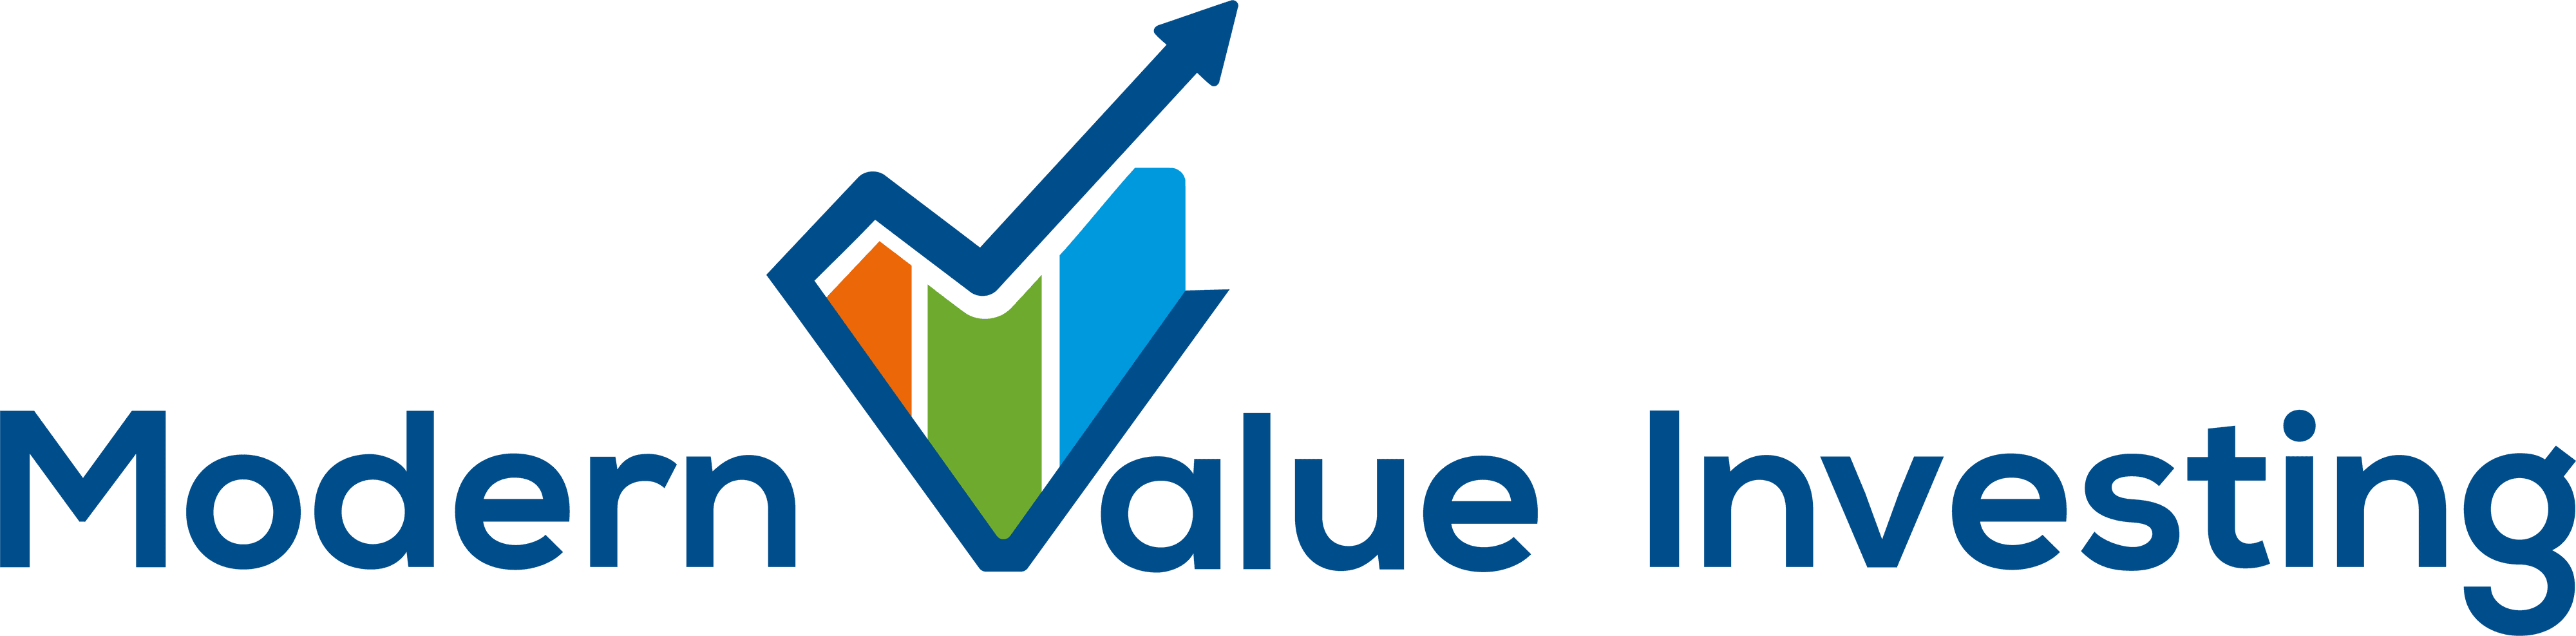 modern_value_investing バナー